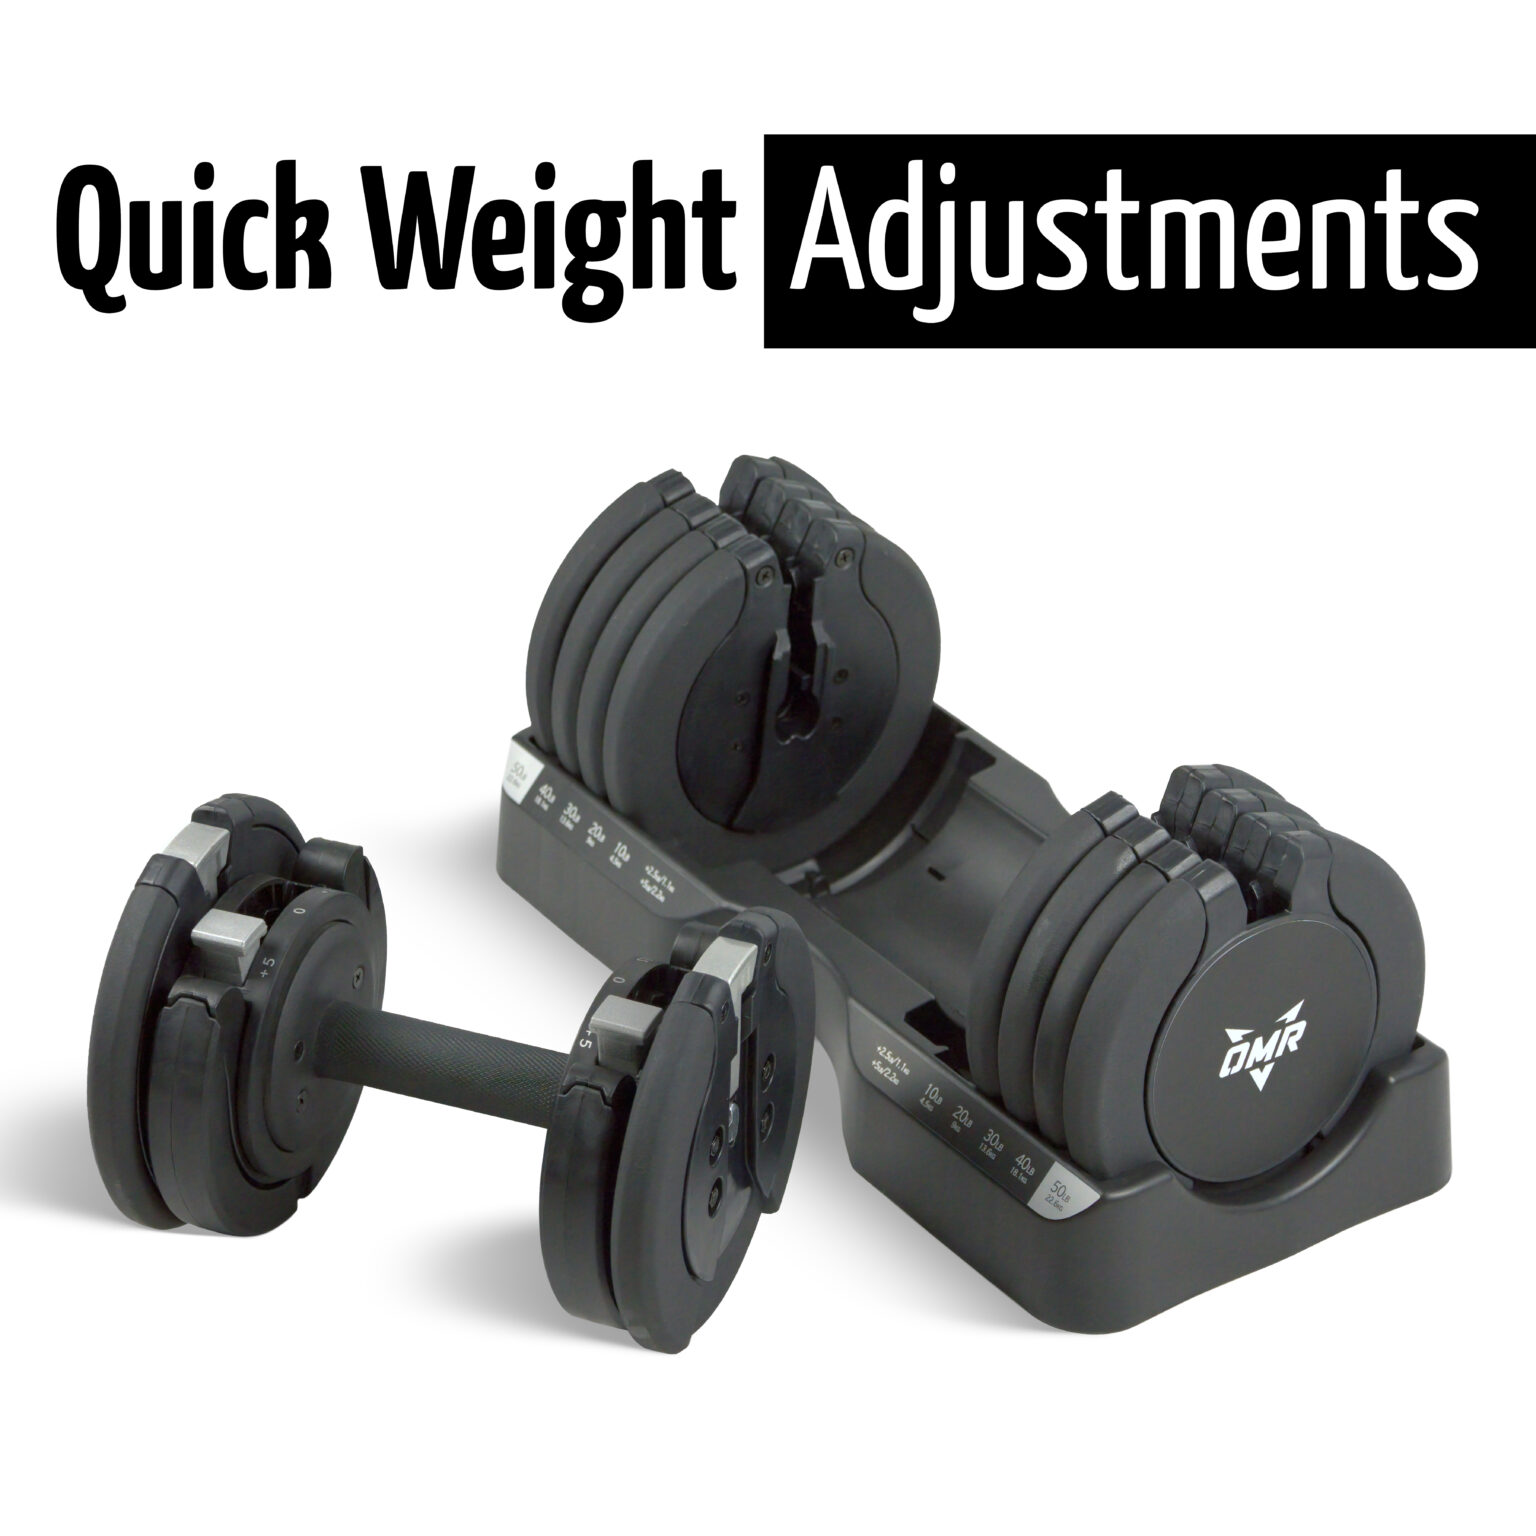 Quick Weight Adjustments 1 Edit